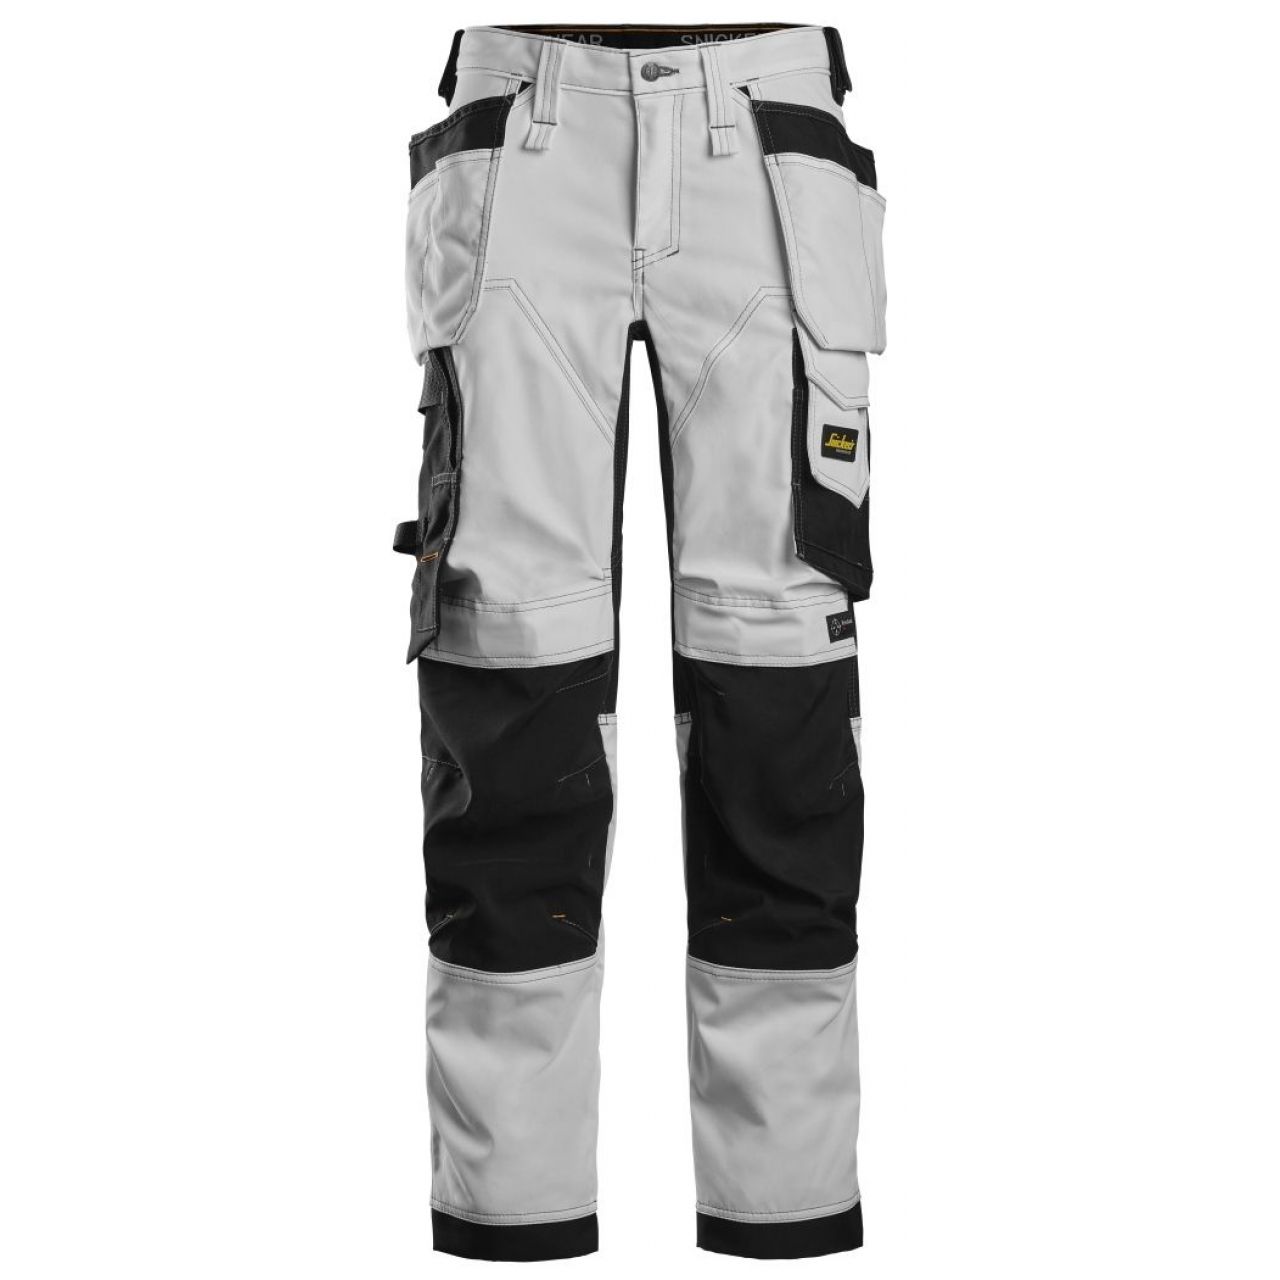 Pantalon elastico mujer bolsillos flotantes AllroundWork blanco-negro talla 044